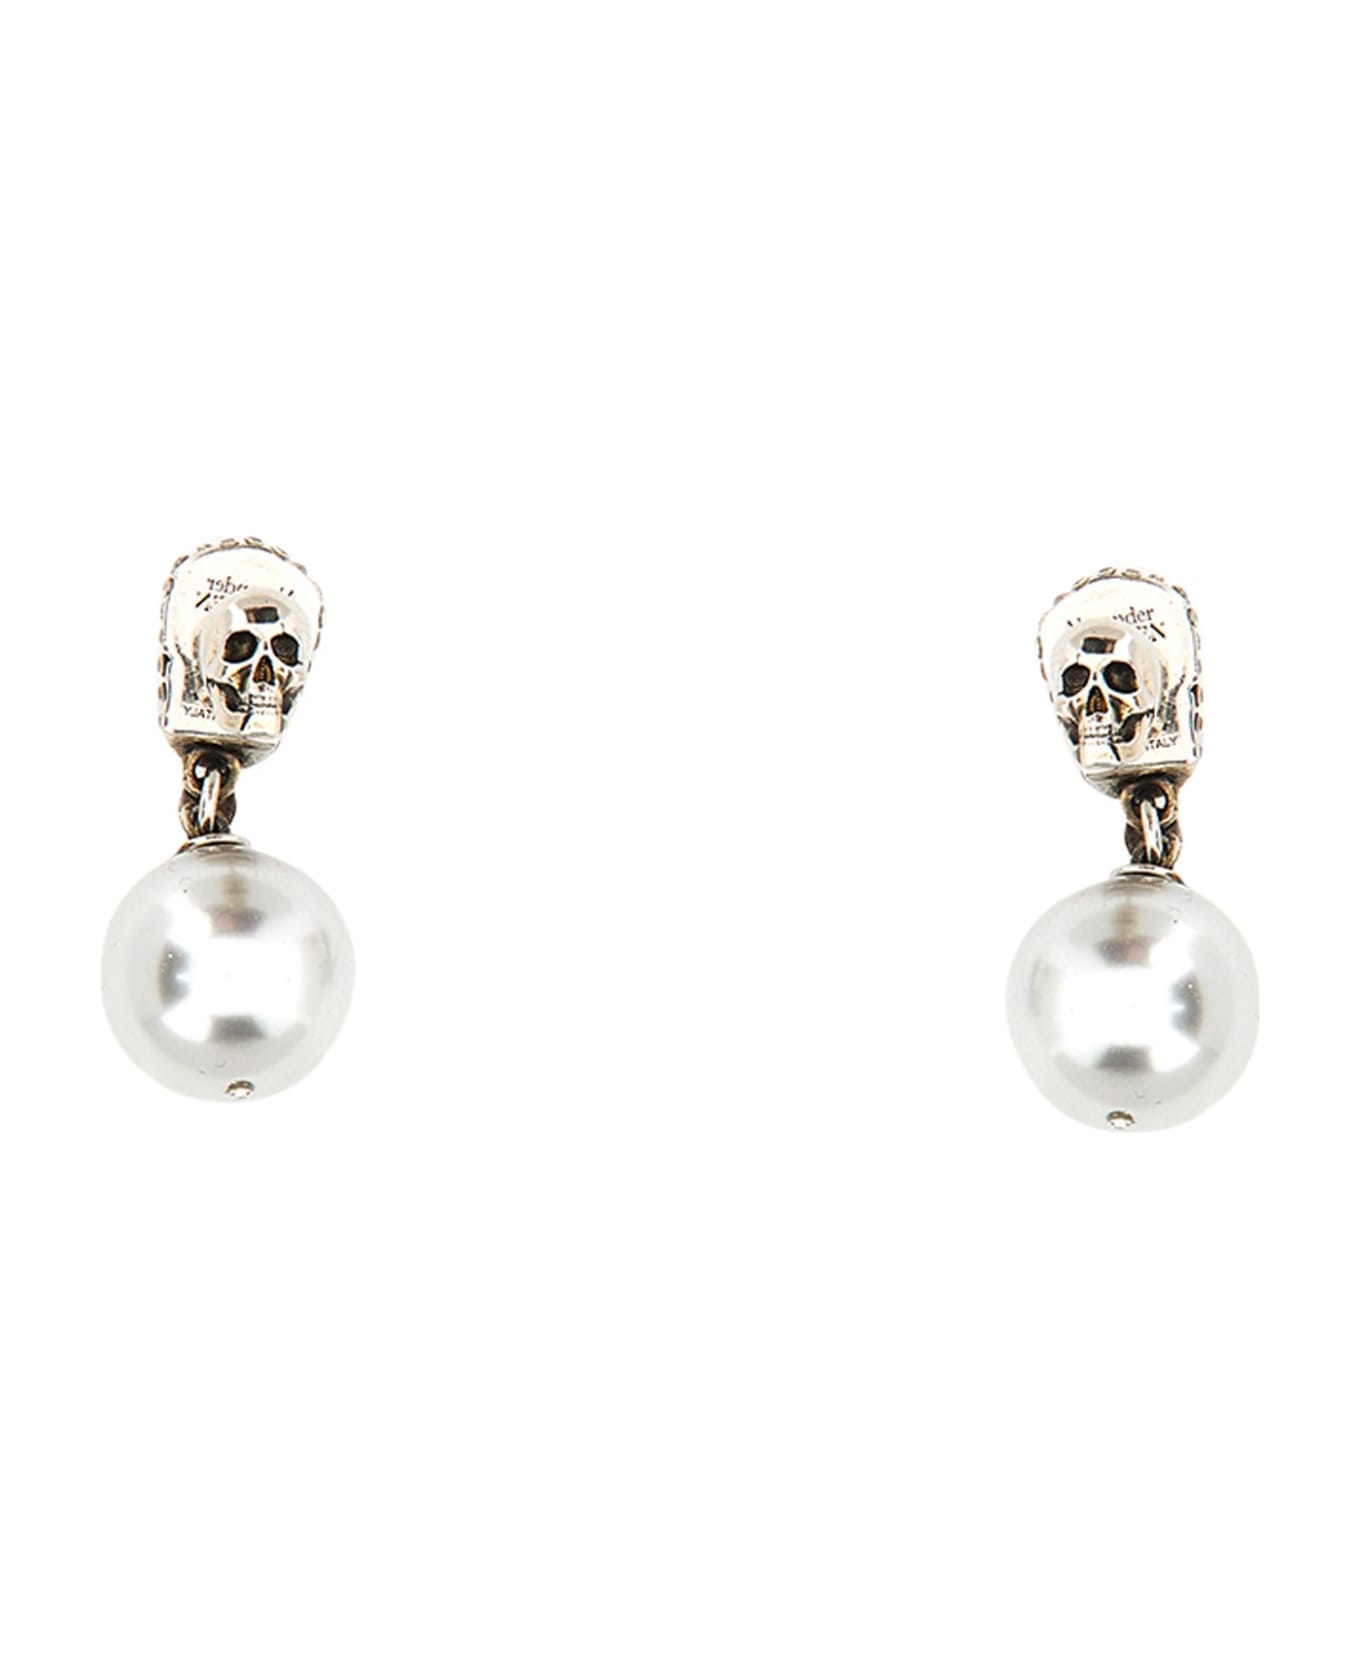 Alexander McQueen Skull Pearl Earrings - Silver イヤリング